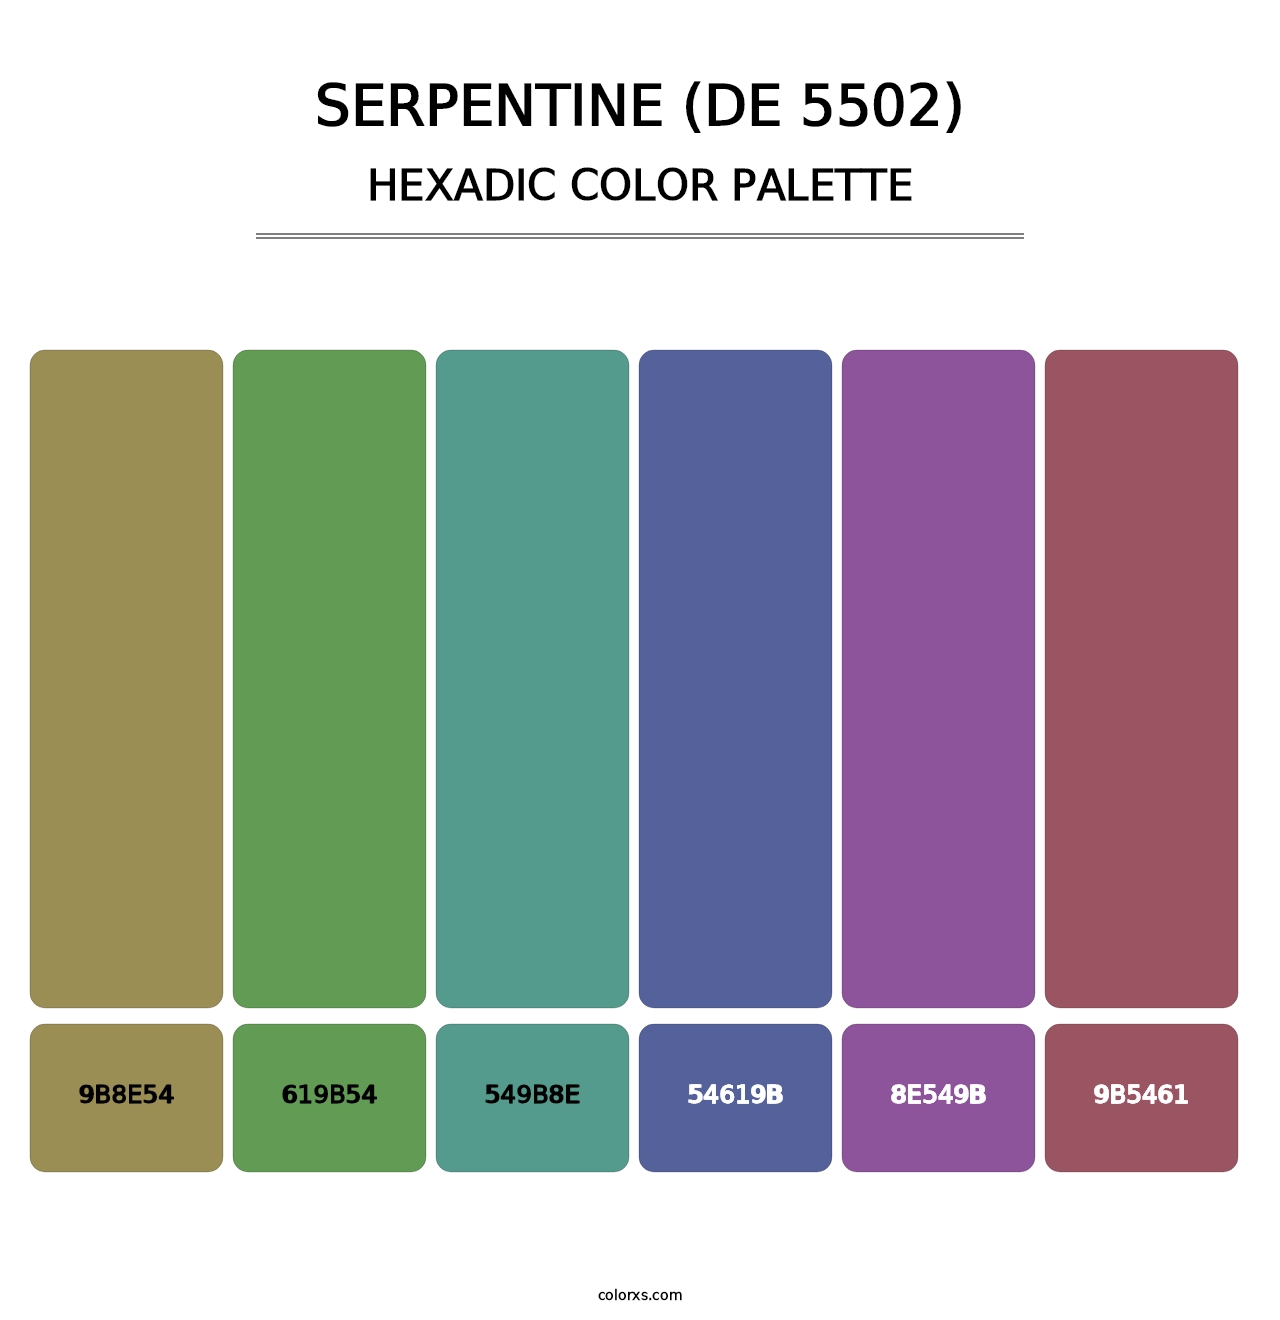 Serpentine (DE 5502) - Hexadic Color Palette